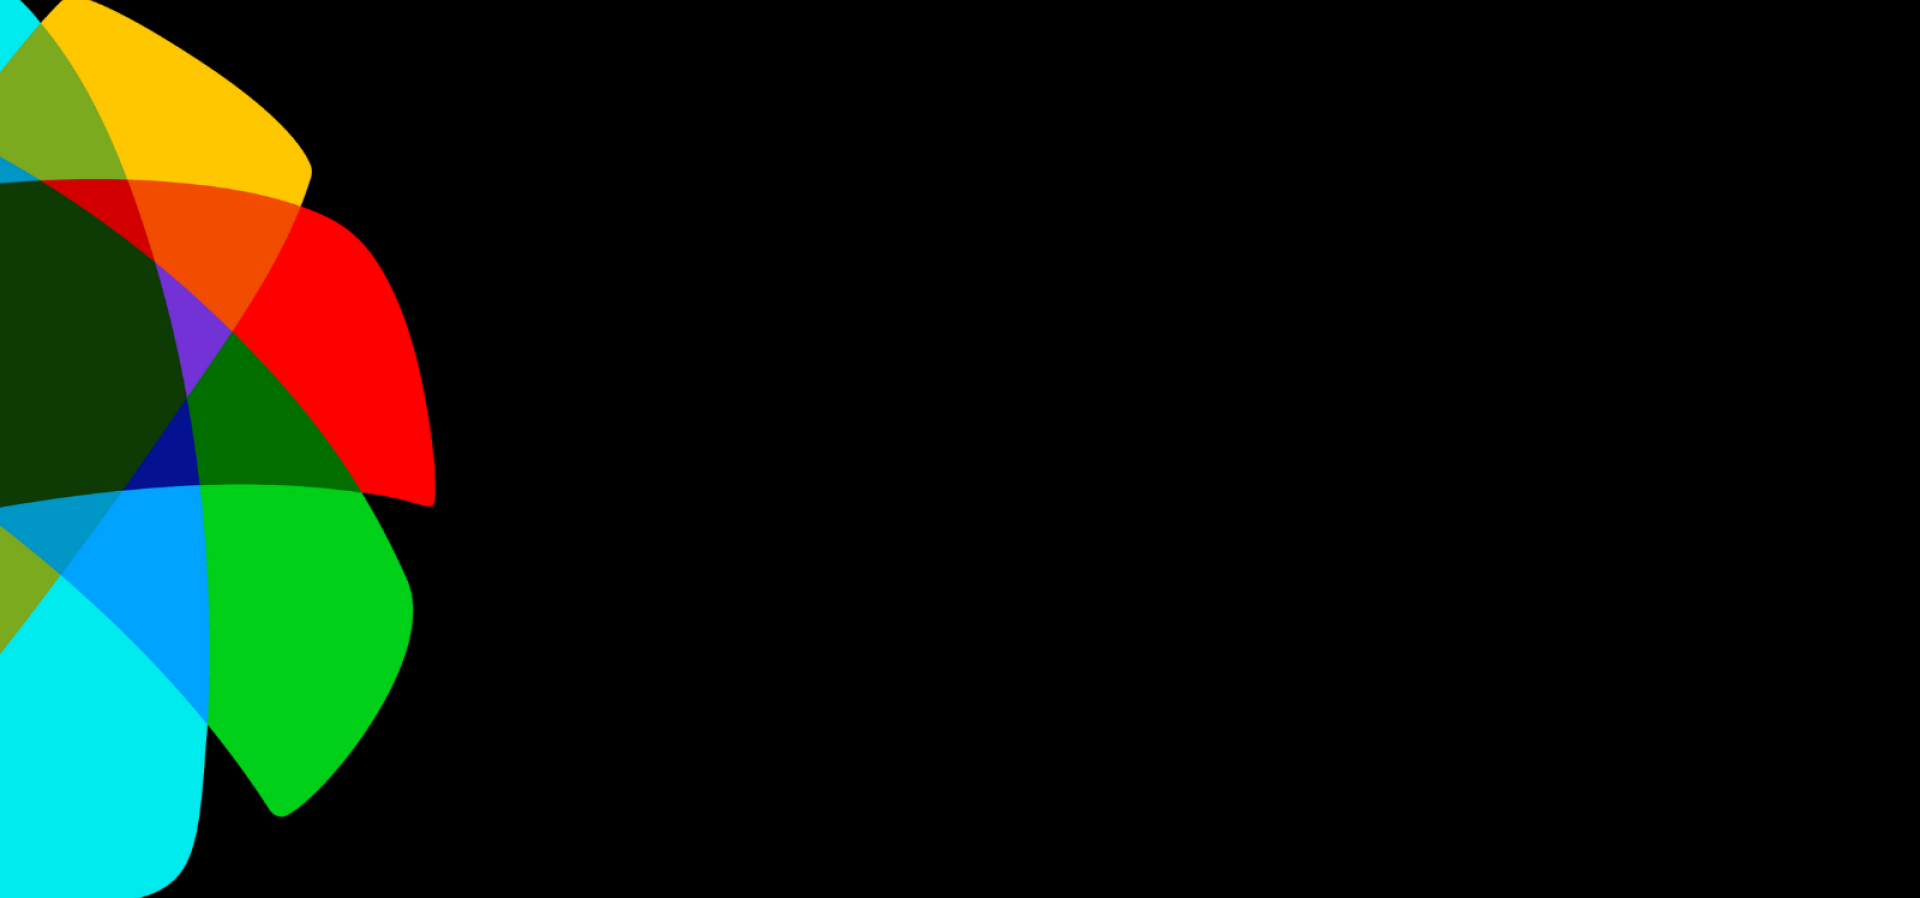 PF logo on black background